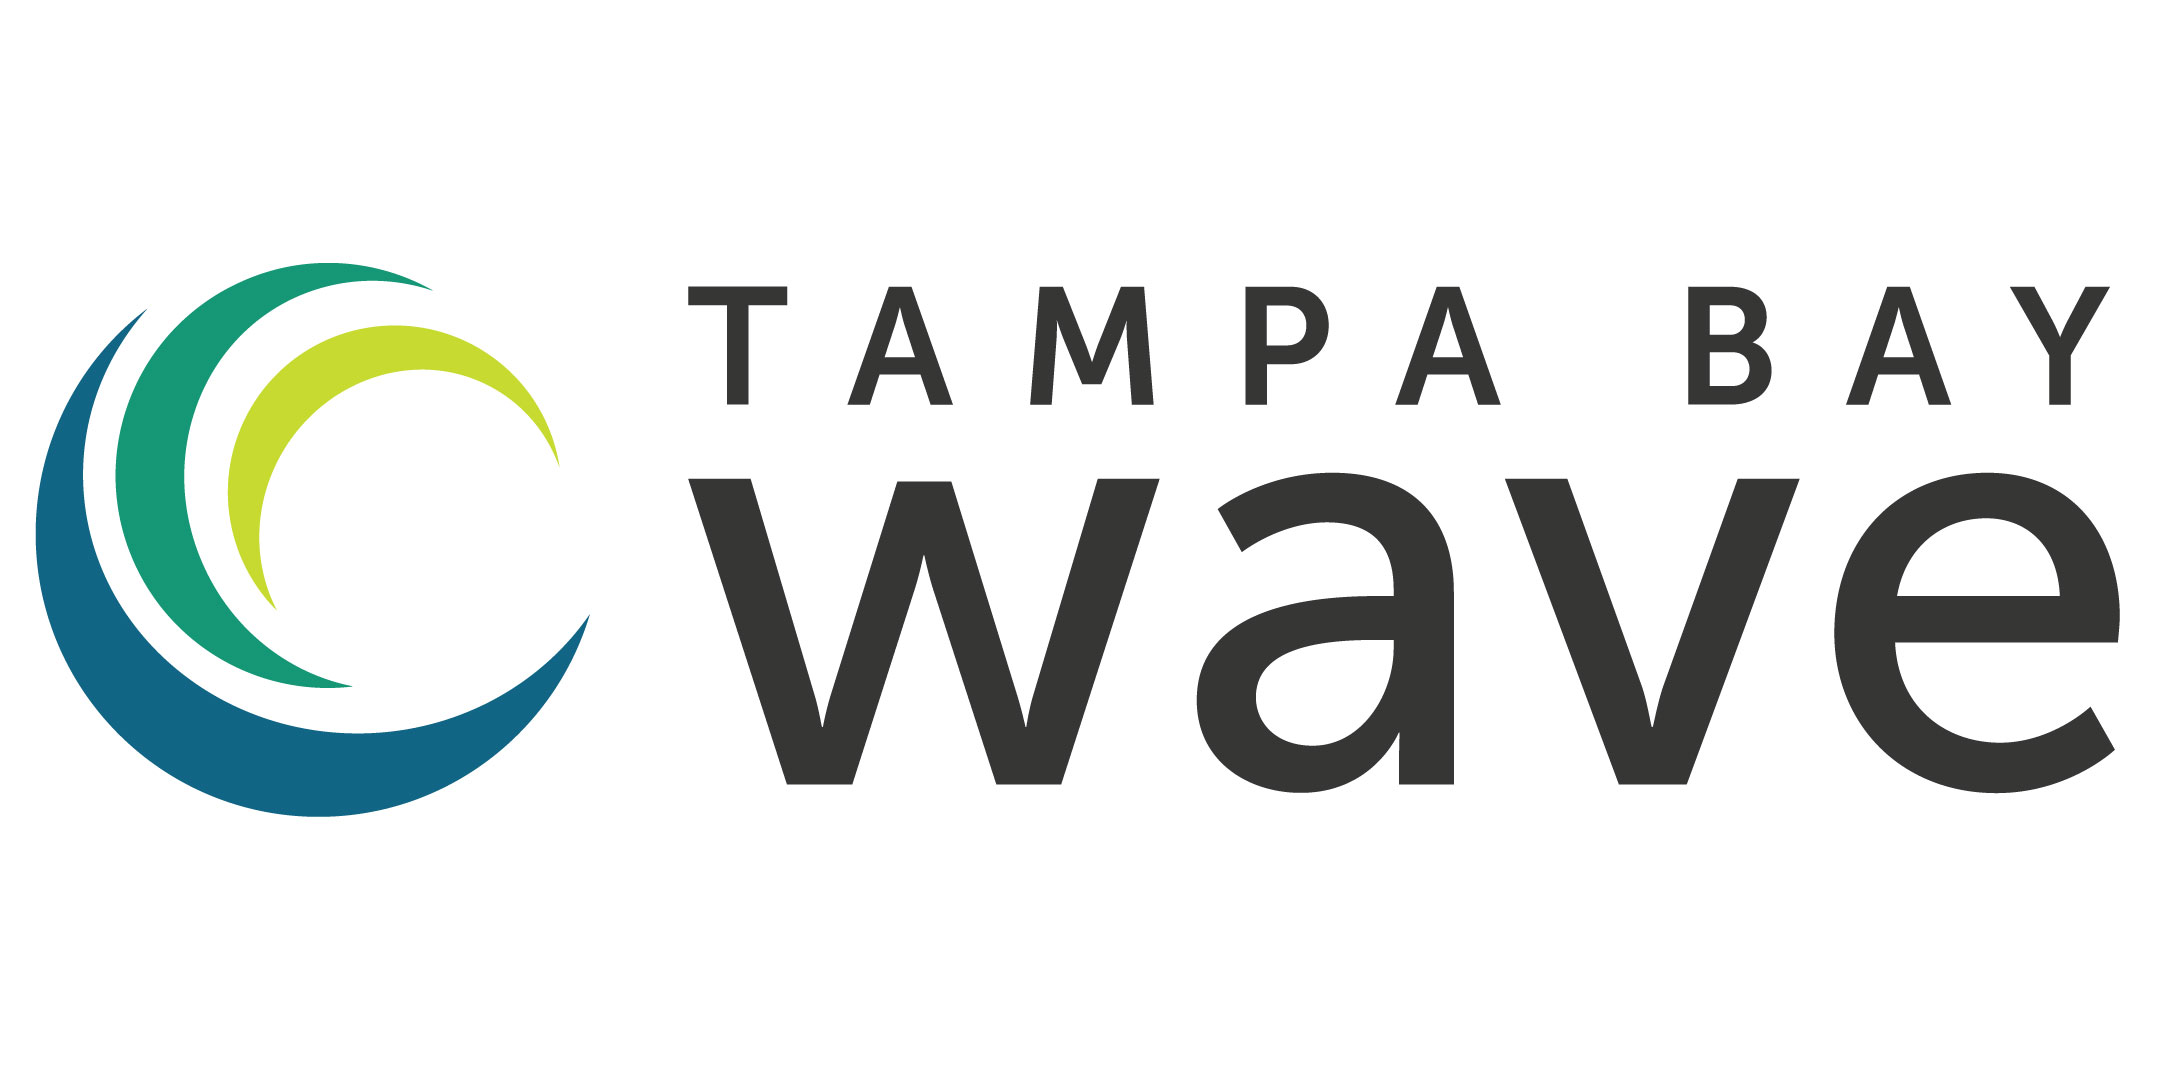 Tampa Bay Wave